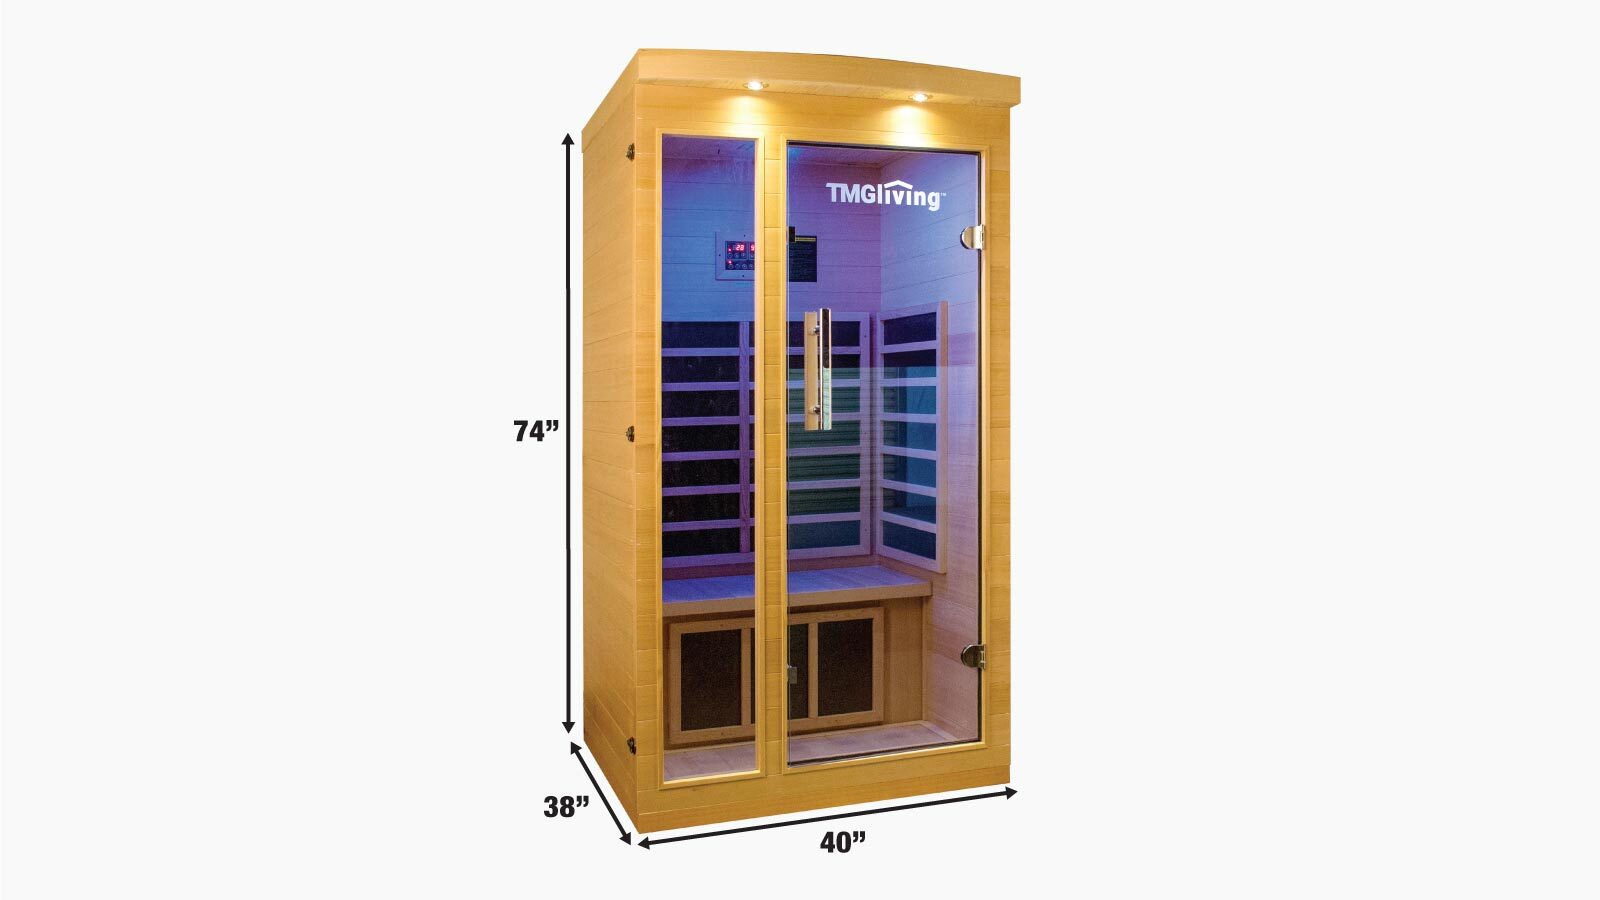 TMG LIVING One Person Indoor Infrared Sauna Room, Natural Canadian Hemlock, Bluetooth Speakers, Tempered Glass Door, TMG-LSN10-specifications-image